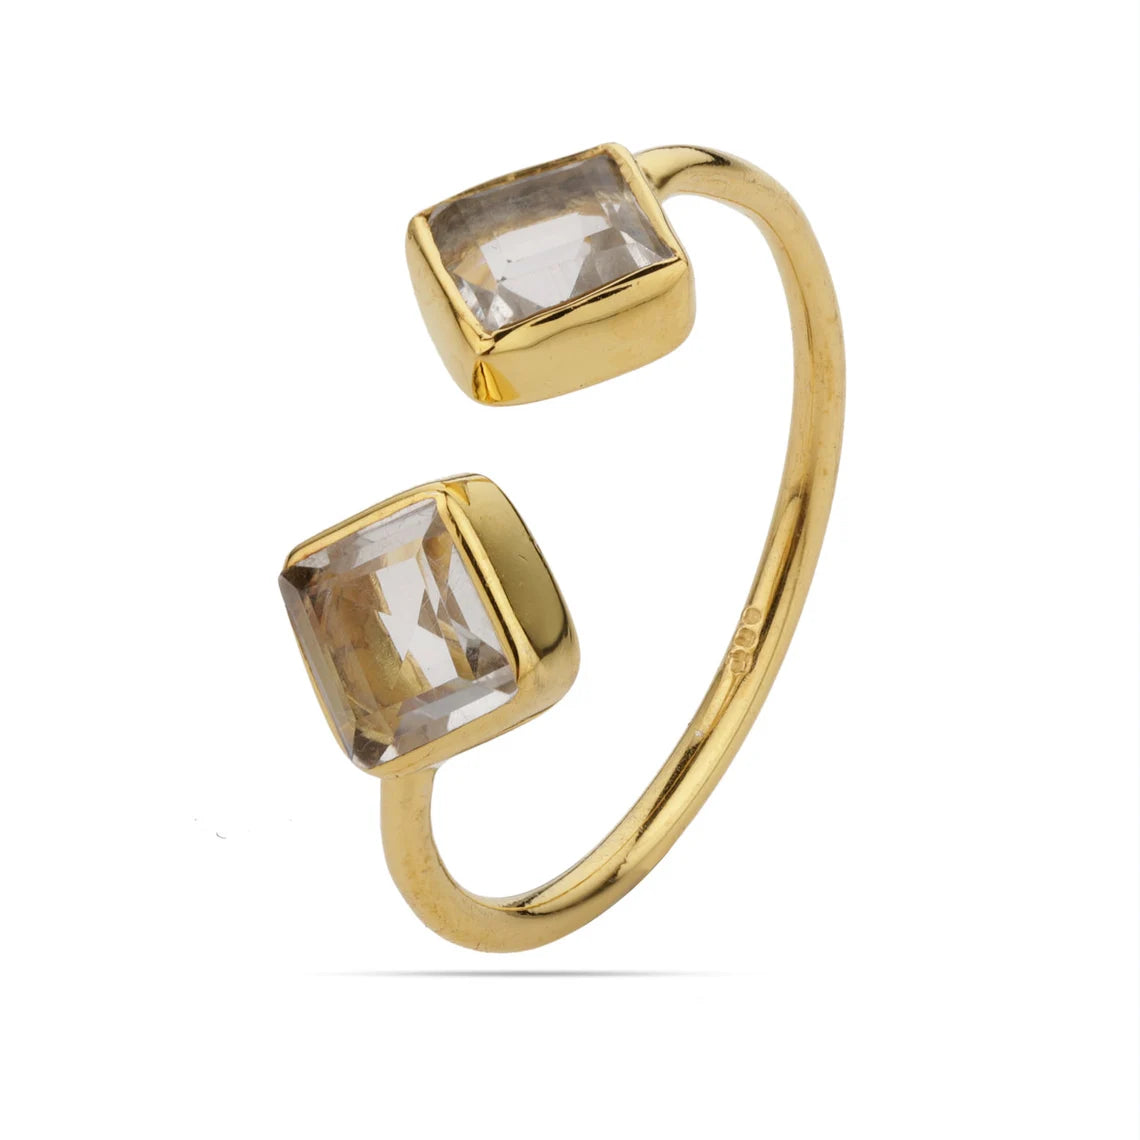 Clear White Crystal Ring, Crystal quartz Ring, Gemstone Ring, Adjustable Ring